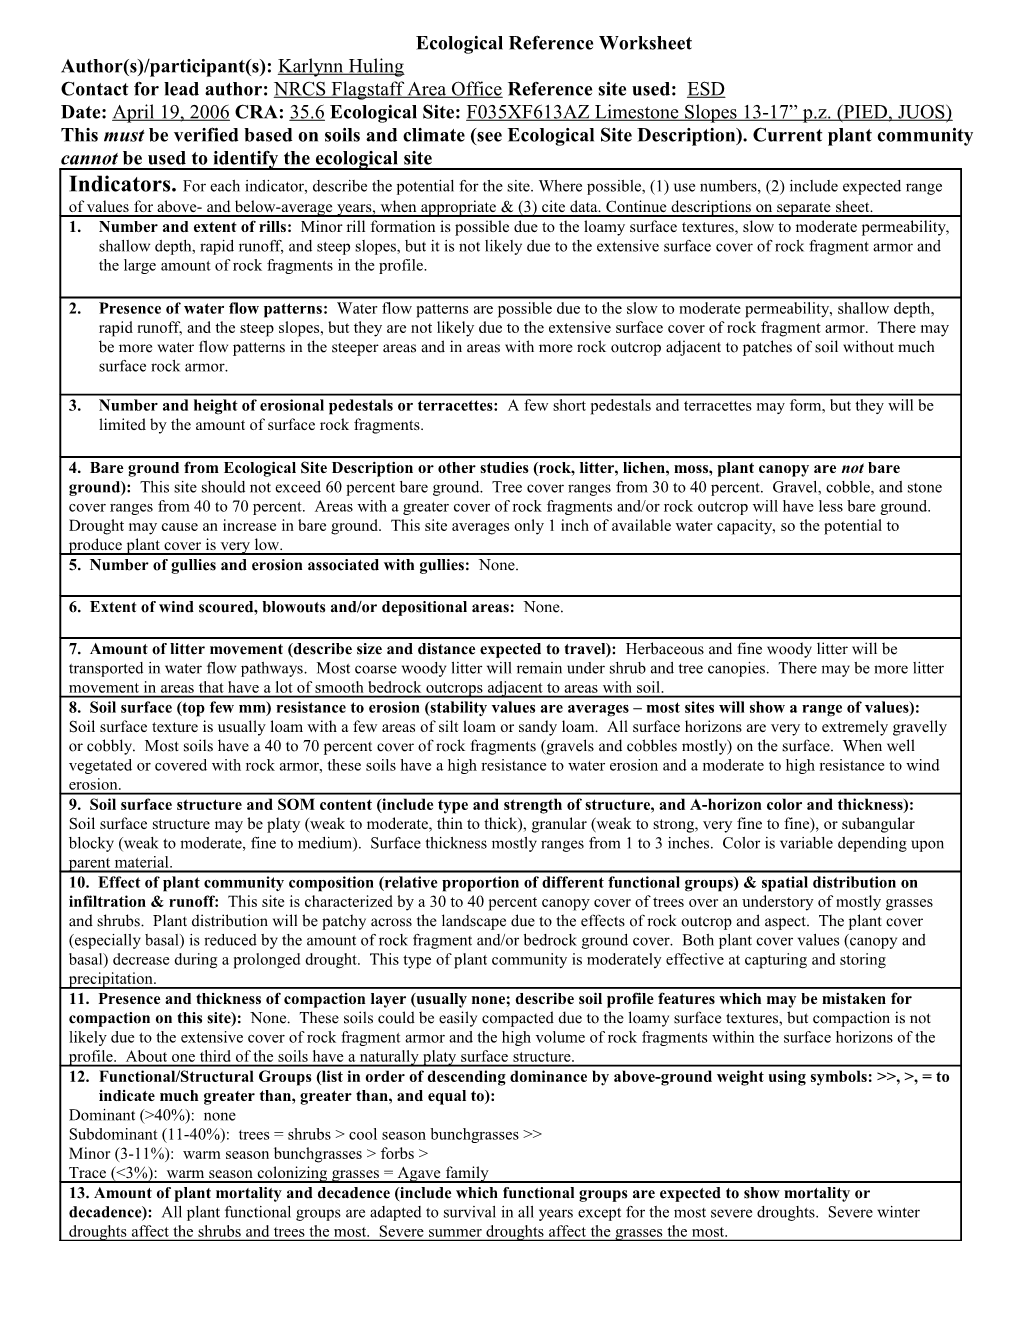 Ecological Reference Worksheet s1